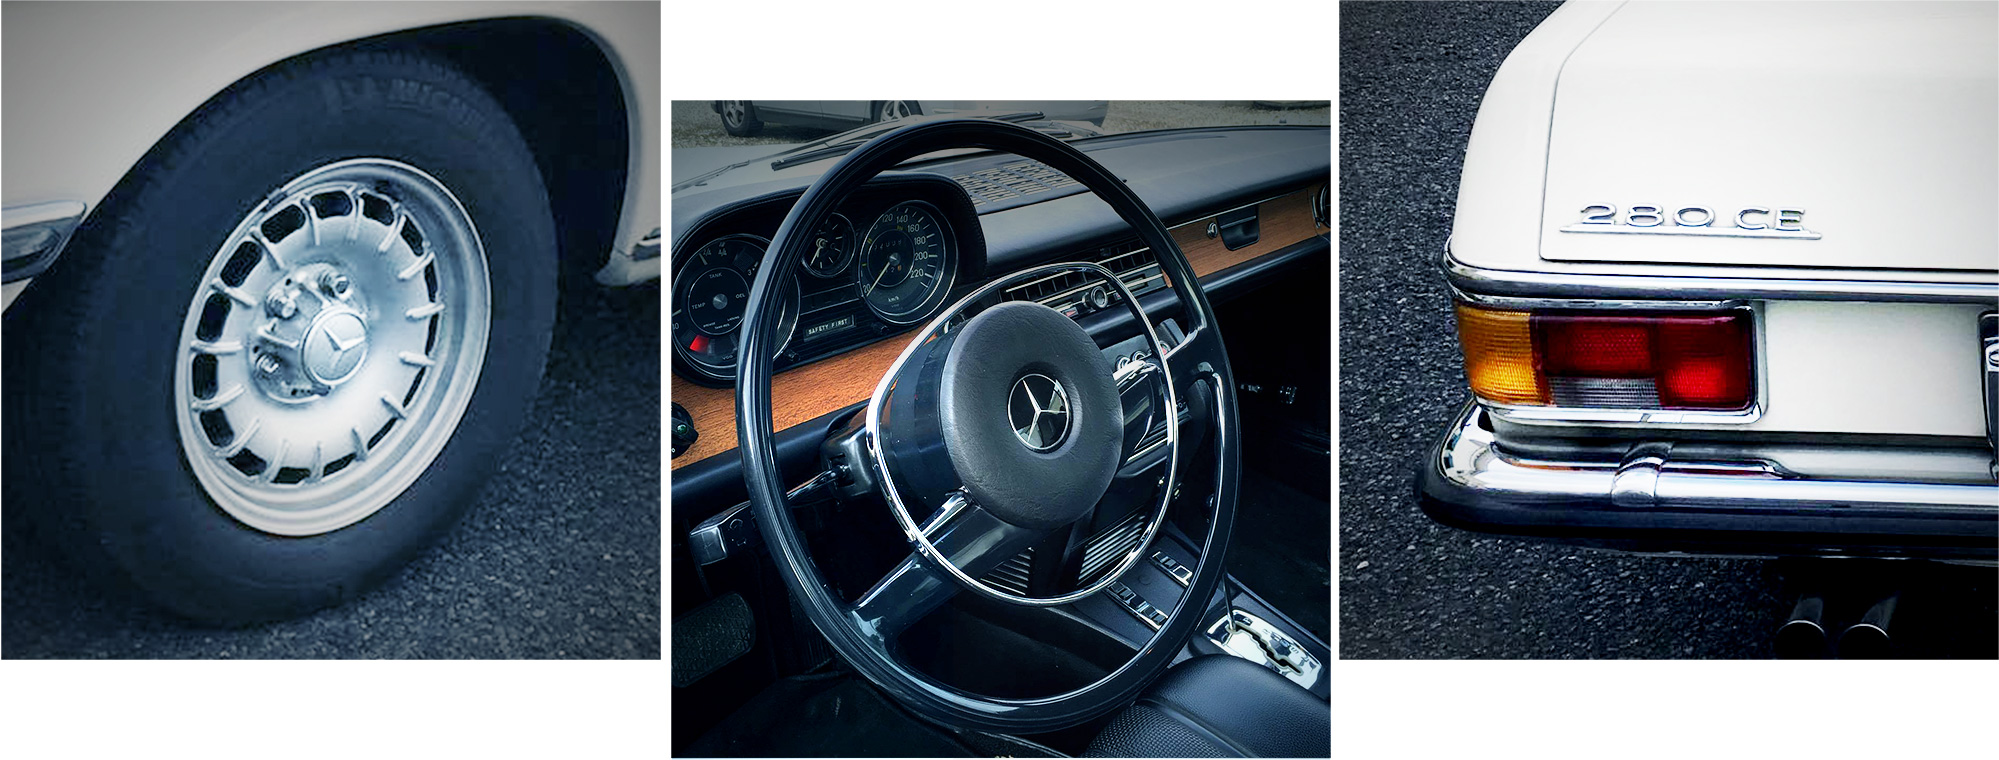 Mercedes-Benz W114 / 280CE | Revive - 良質な車を買いたい人のための 